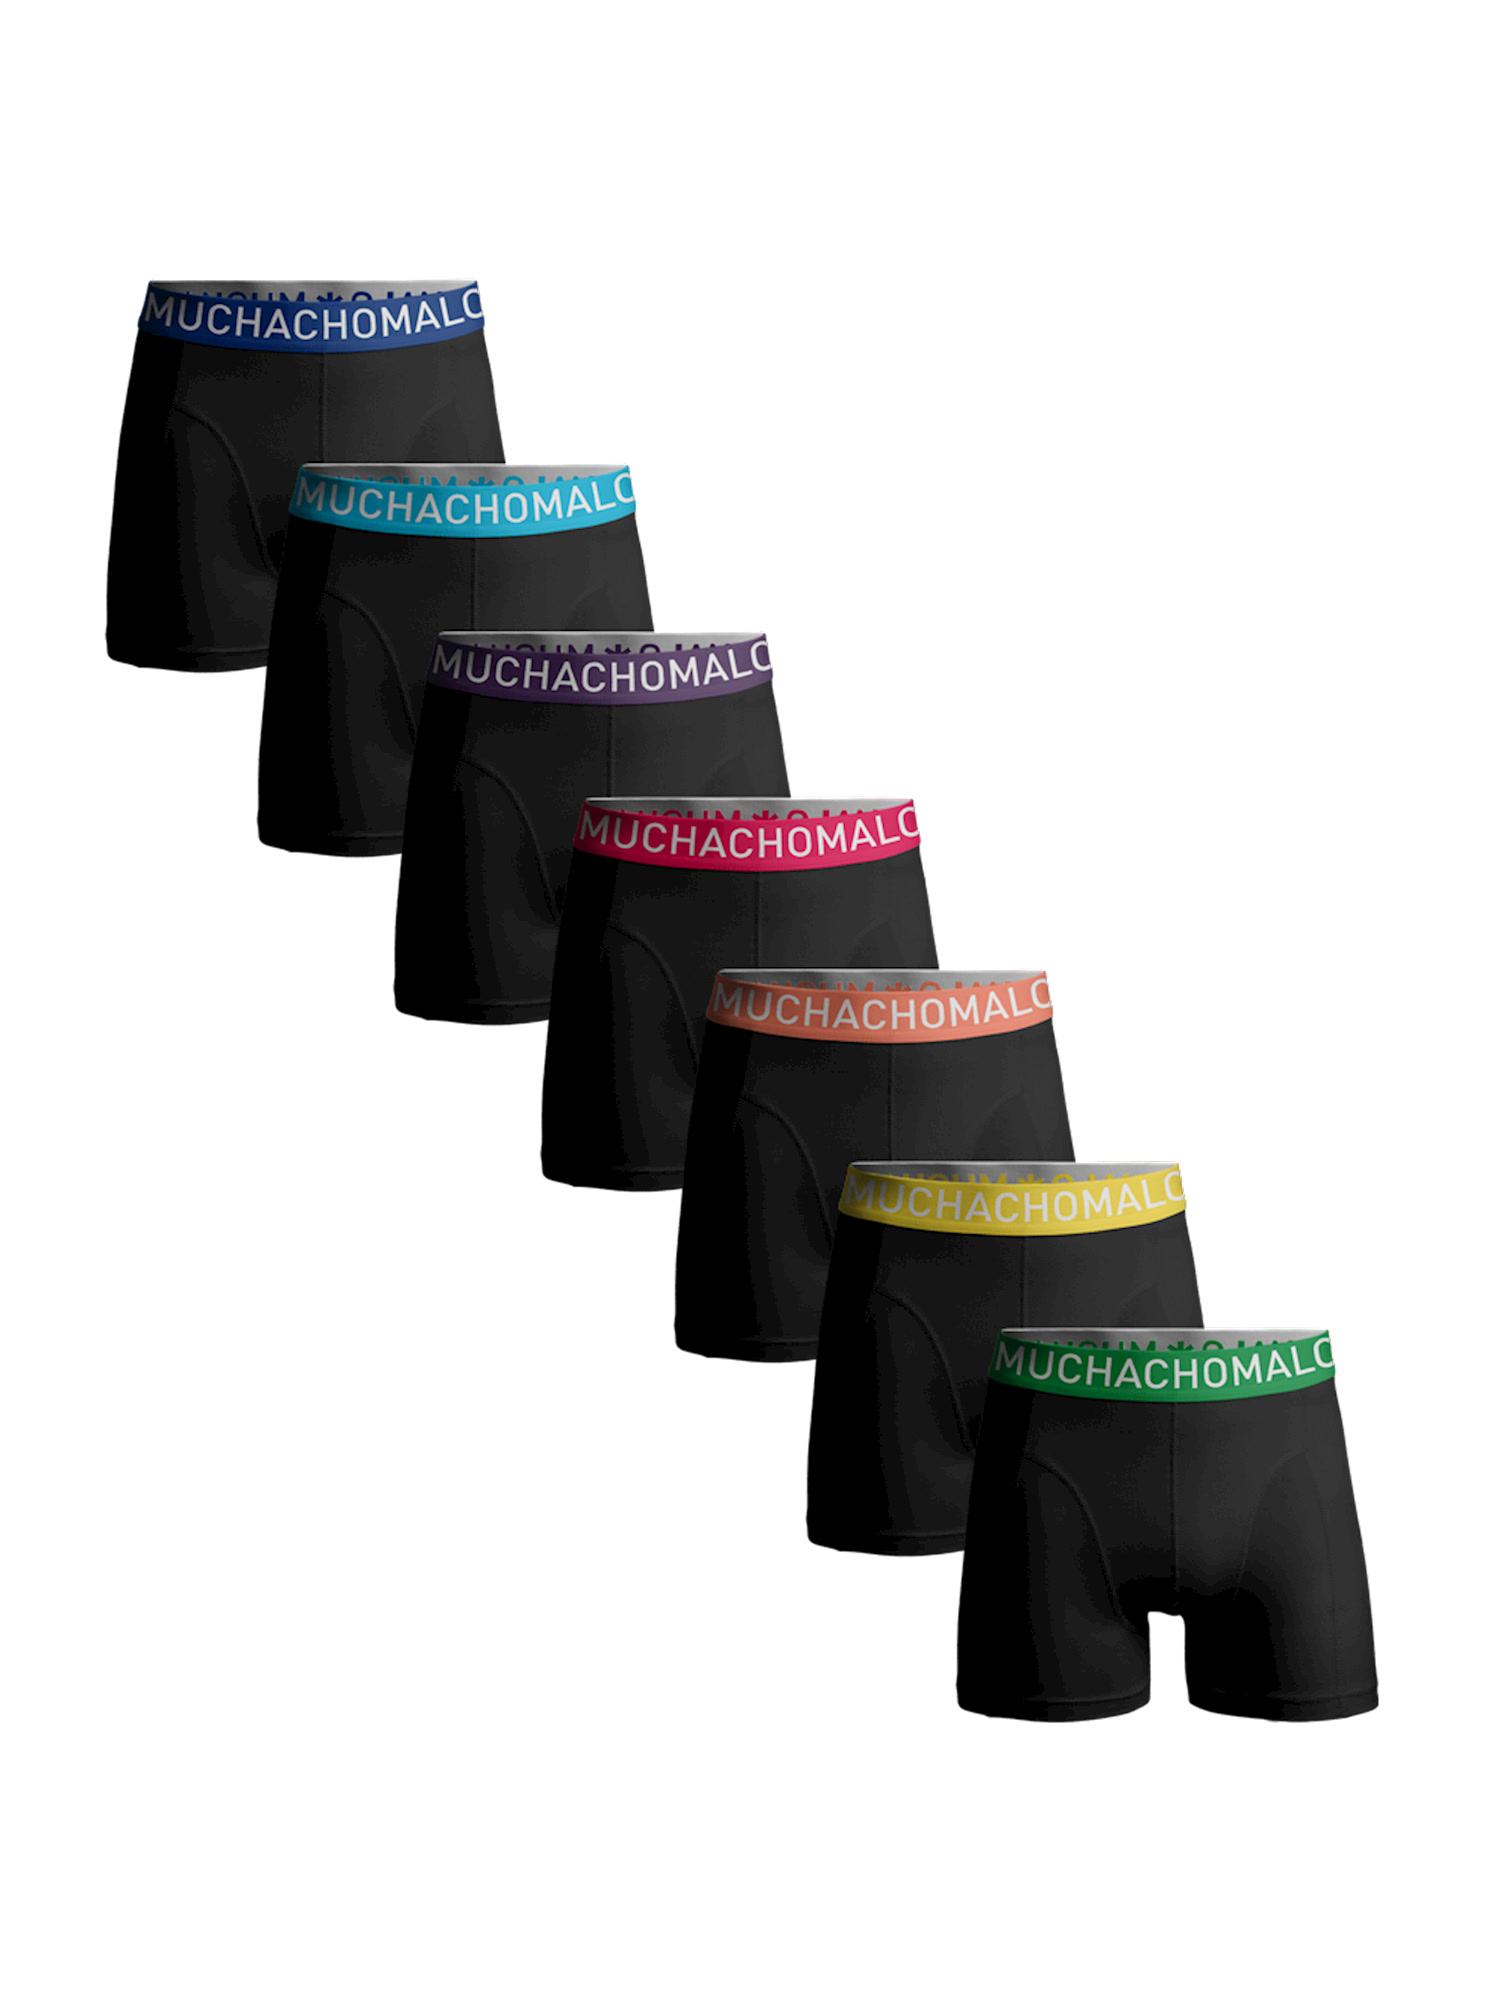 Боксеры Muchachomalo 7er-Set: Boxershorts, цвет Black/Black/Black/Black/Black/Black/Black bh6 black